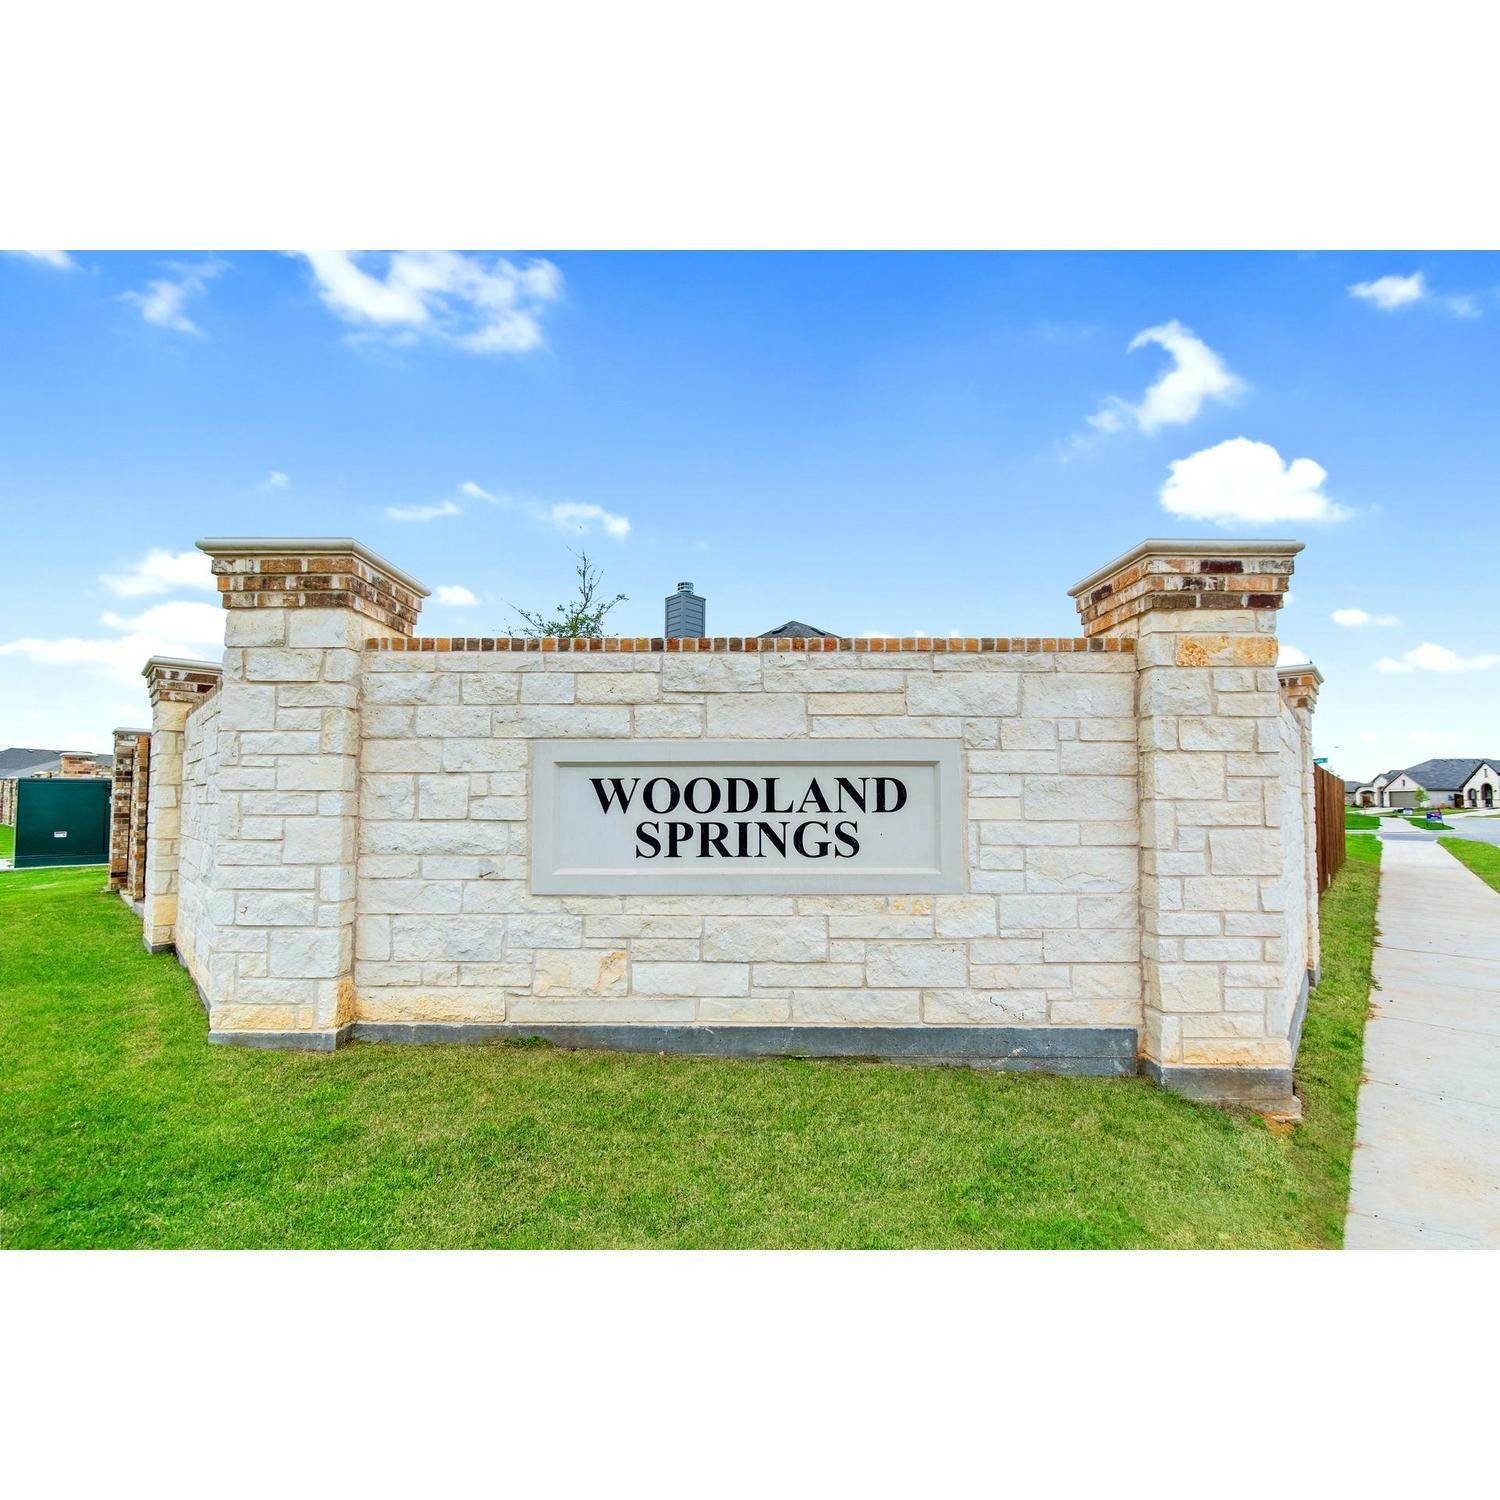 33. Woodland Springs建於 4721 Sassafras Drive, Fort Worth, TX 76036